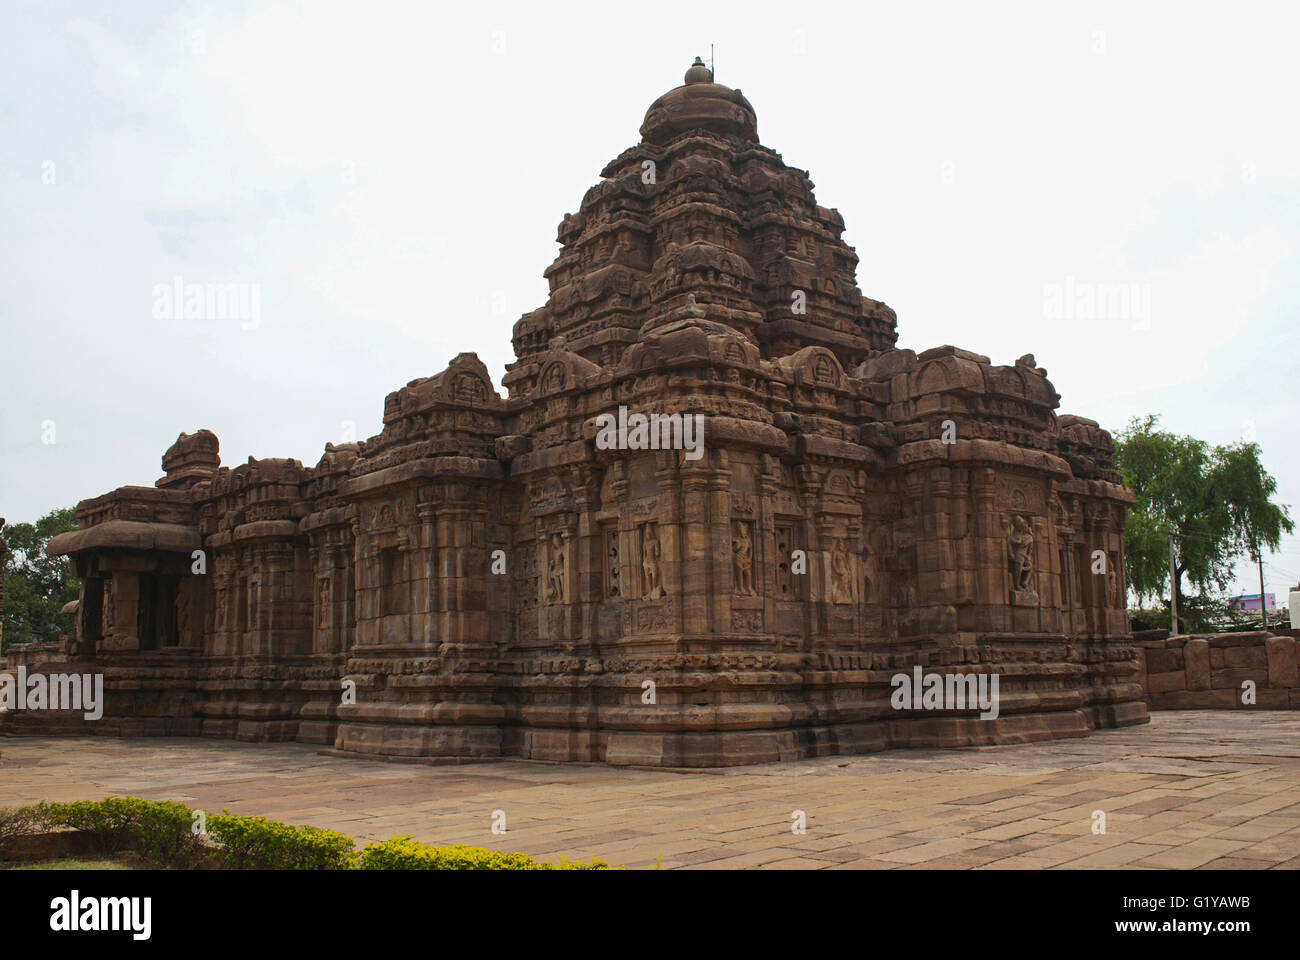 Mallikarjuna Temple, Temple Pattadakal Pattadakal, complexes, Karnataka, Inde. Le nord de mukha mandapa est également considérée. Banque D'Images